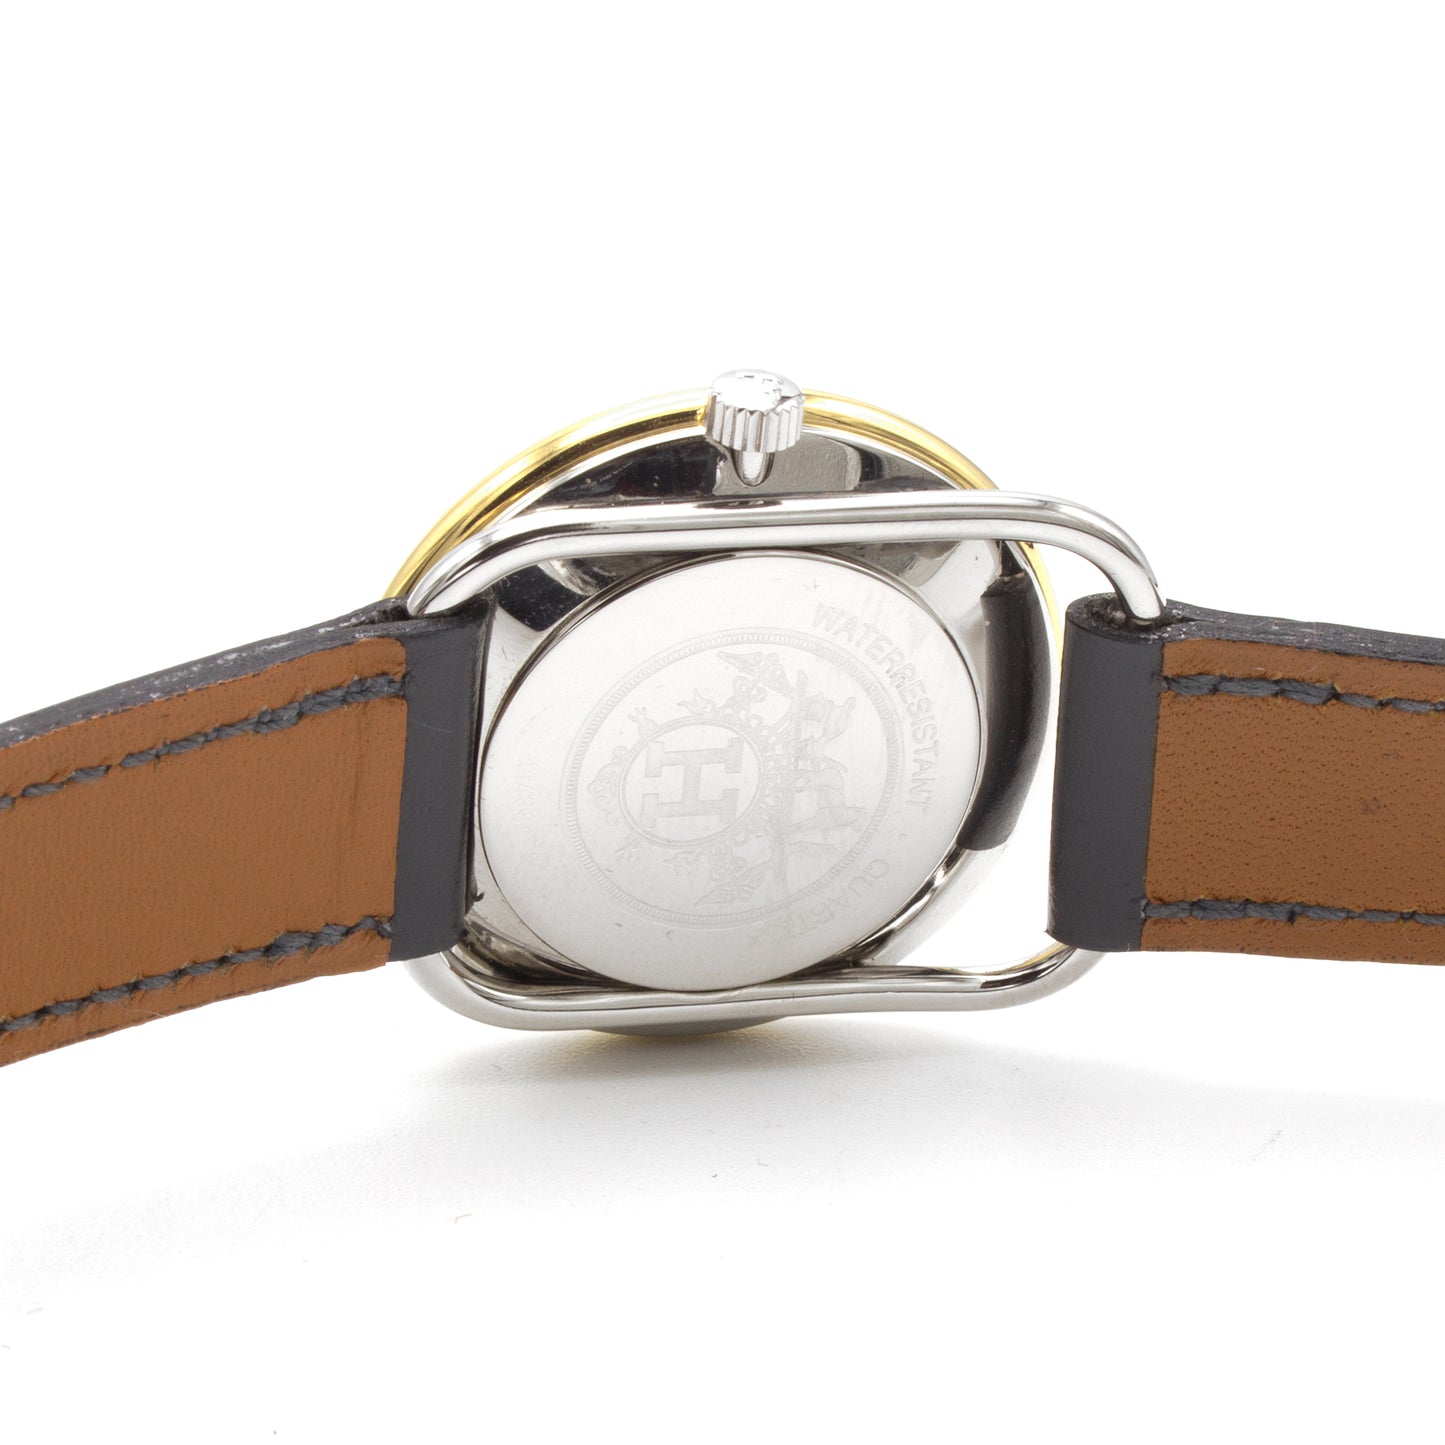 Hermès Arceau 30mm watch